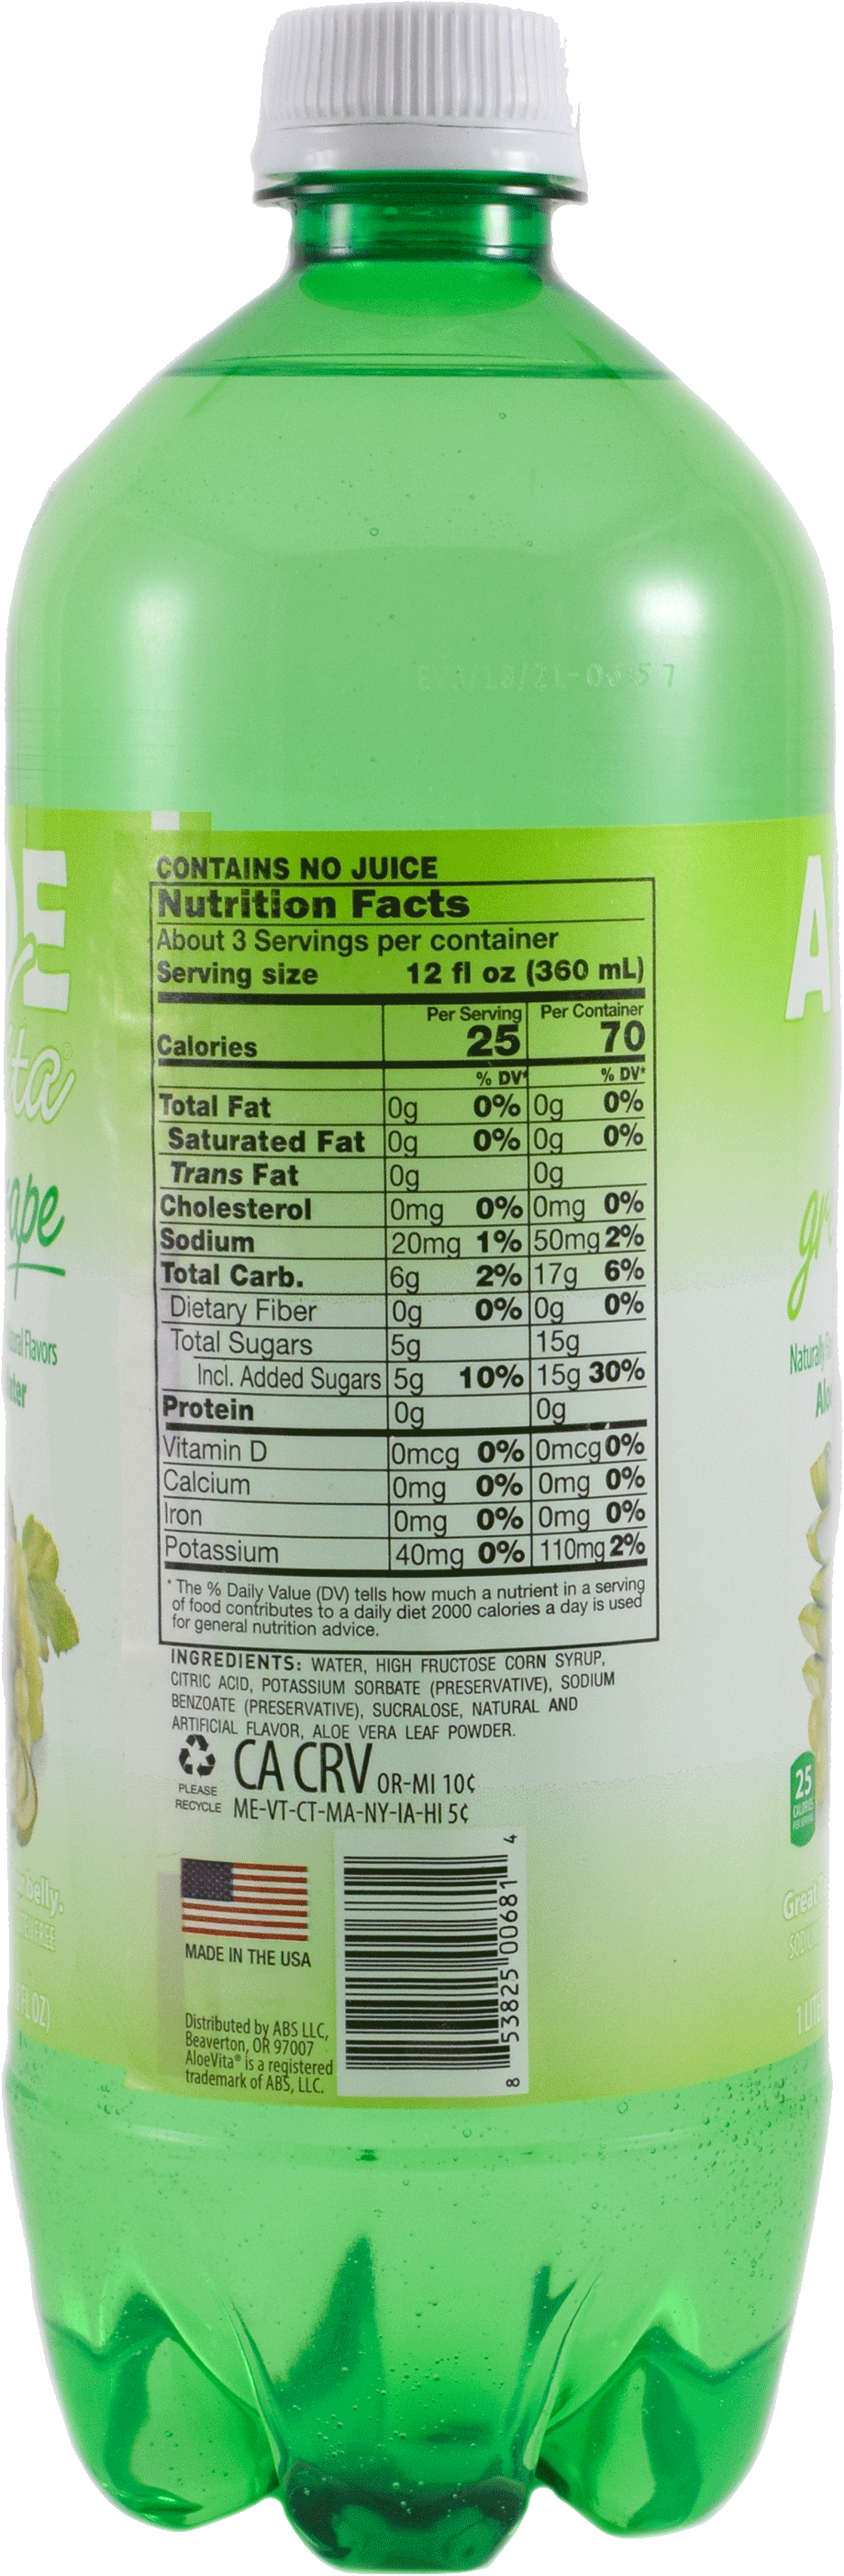 AloeVita 1 liter mango nutritional facts